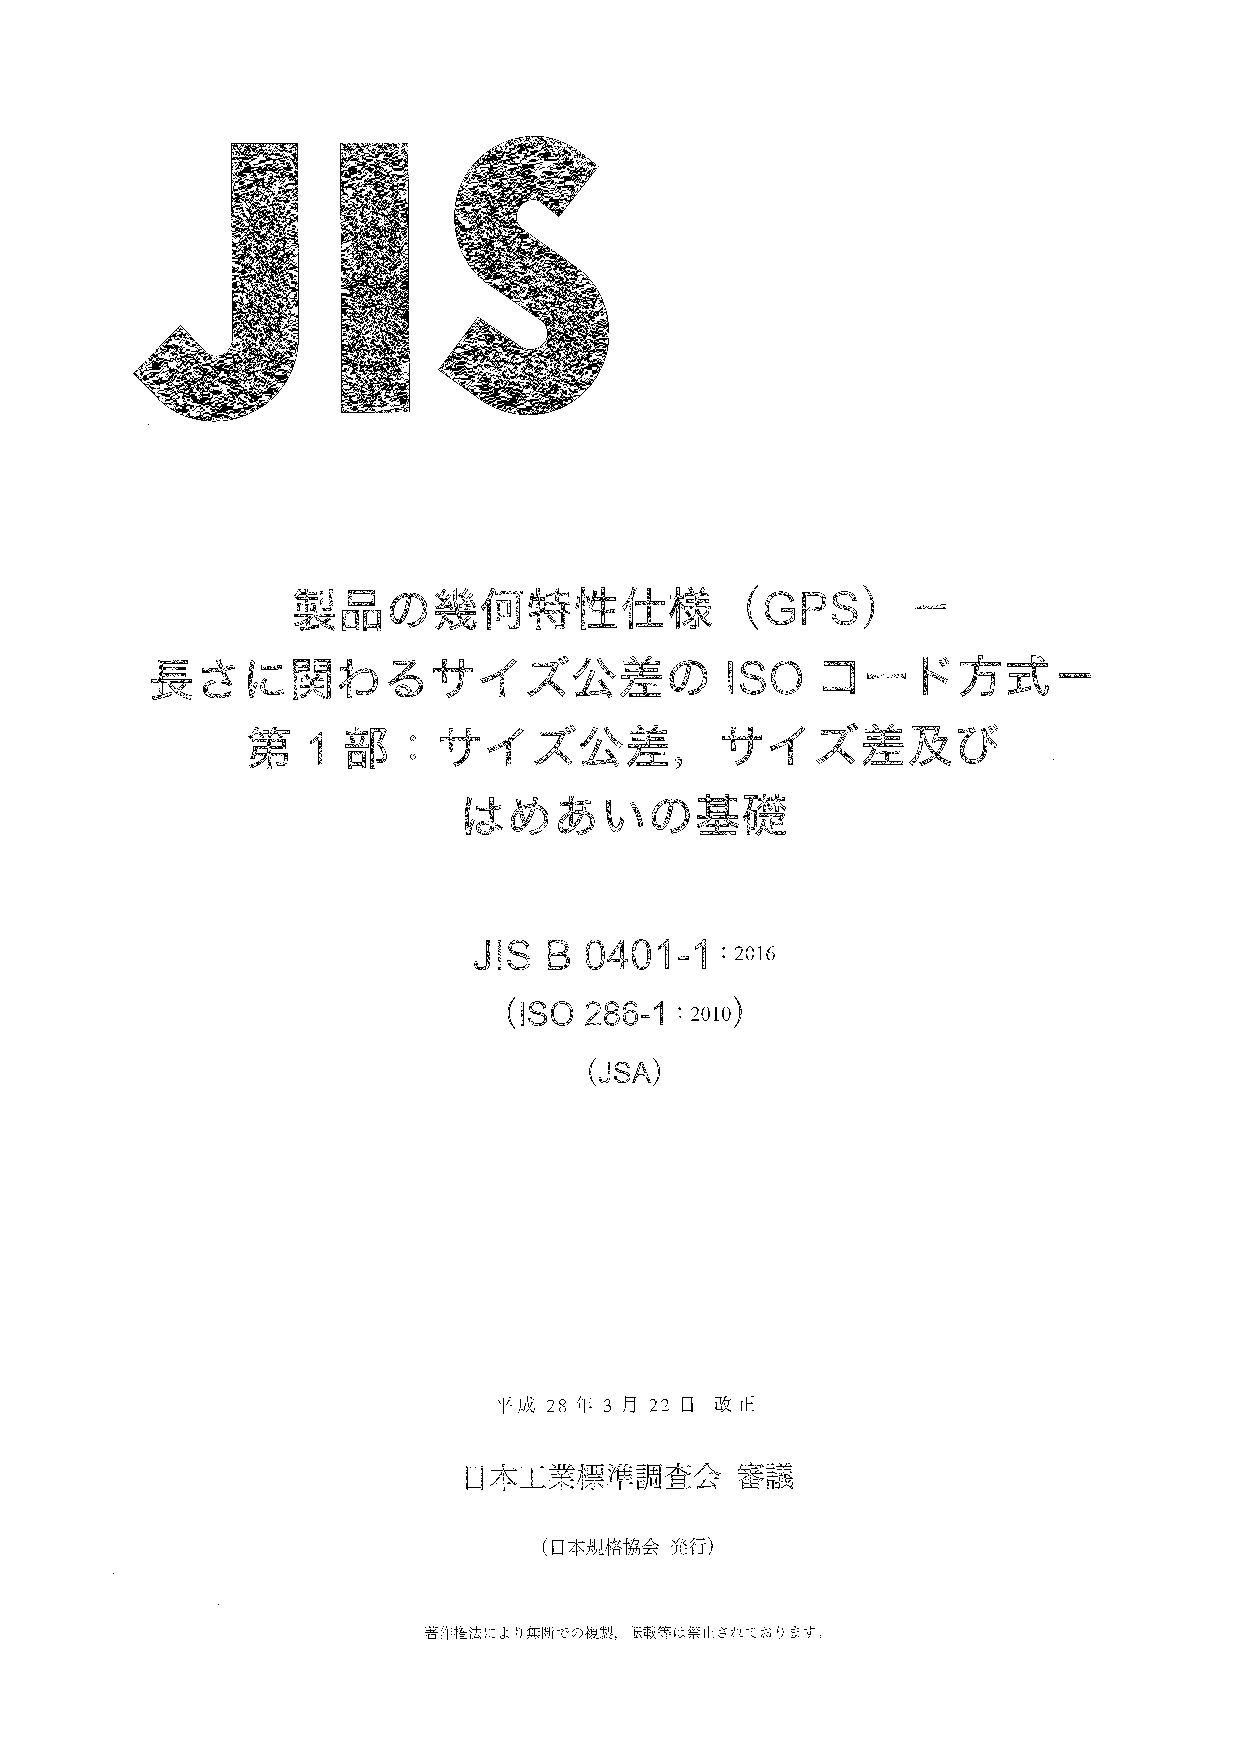 JIS B 0401-1:2016